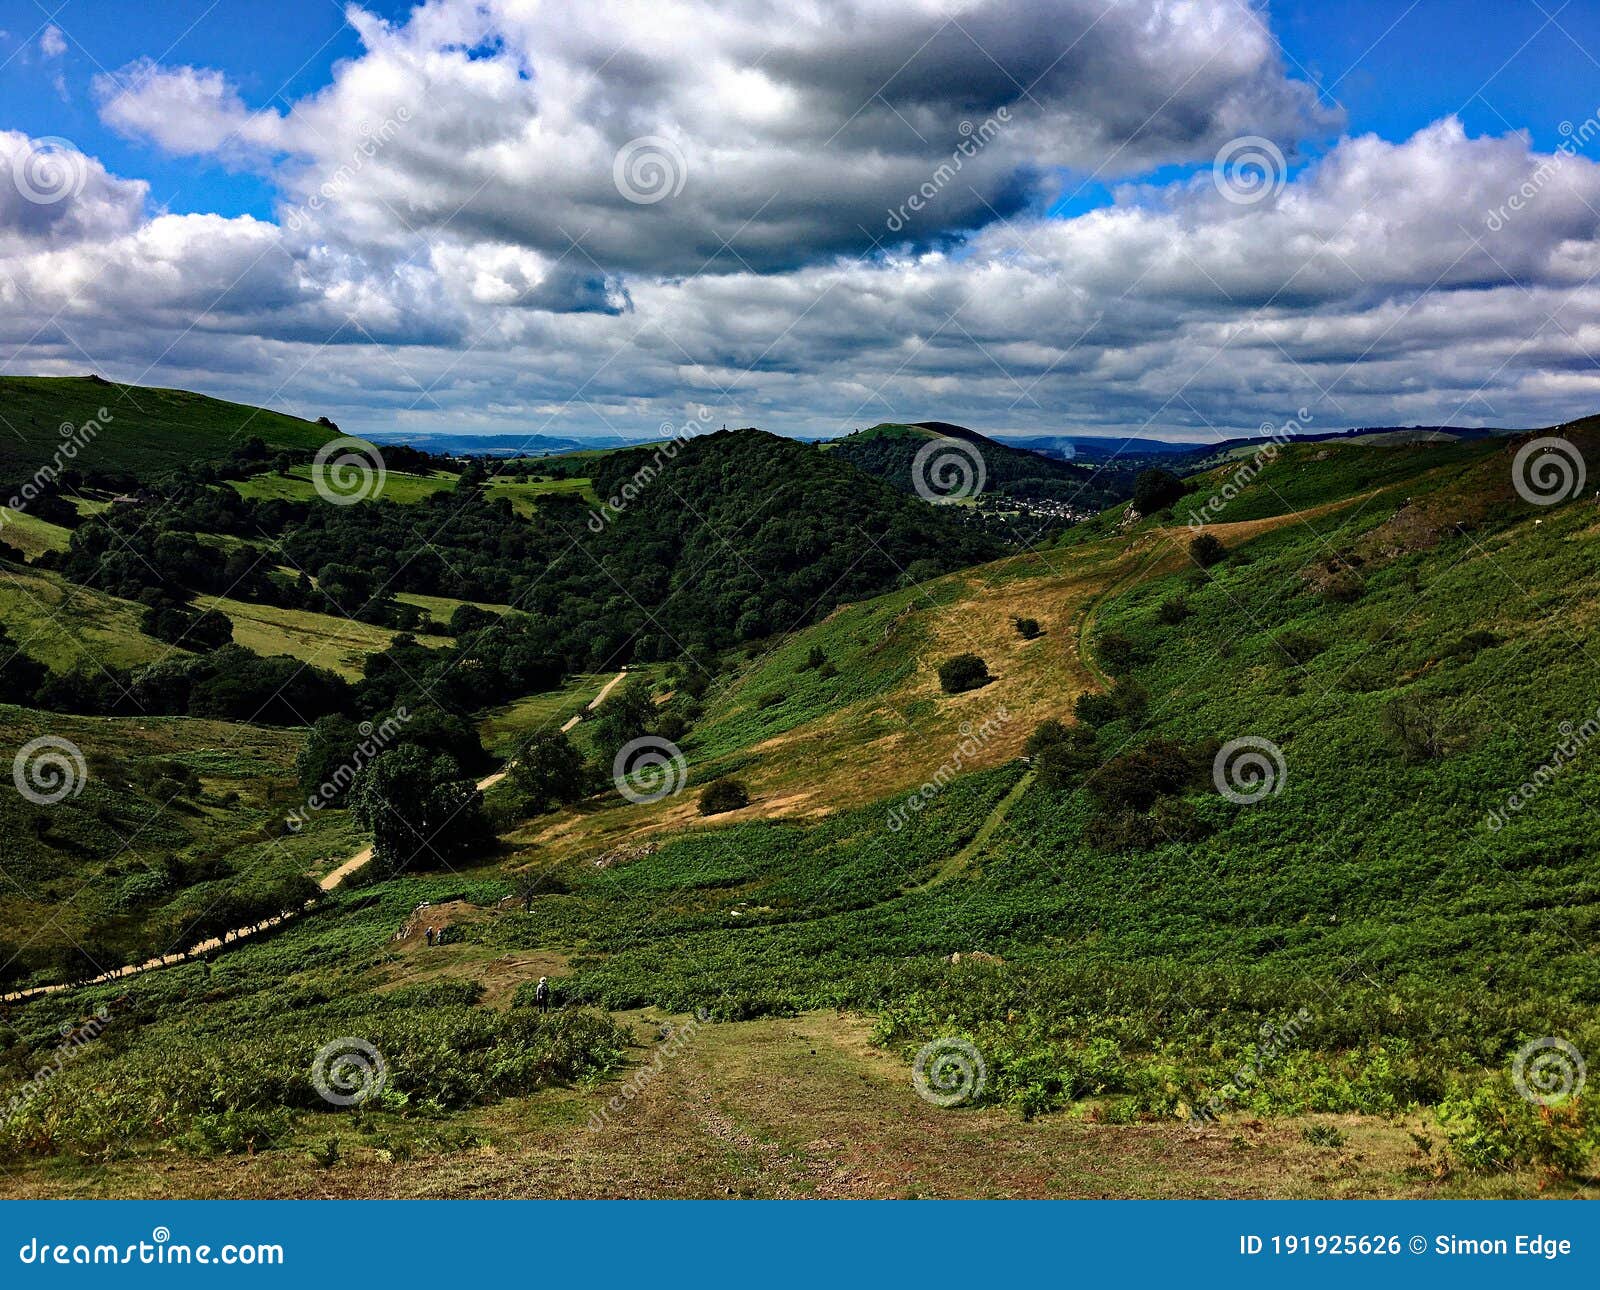 a view of the shropshire countryside near caer caradoc